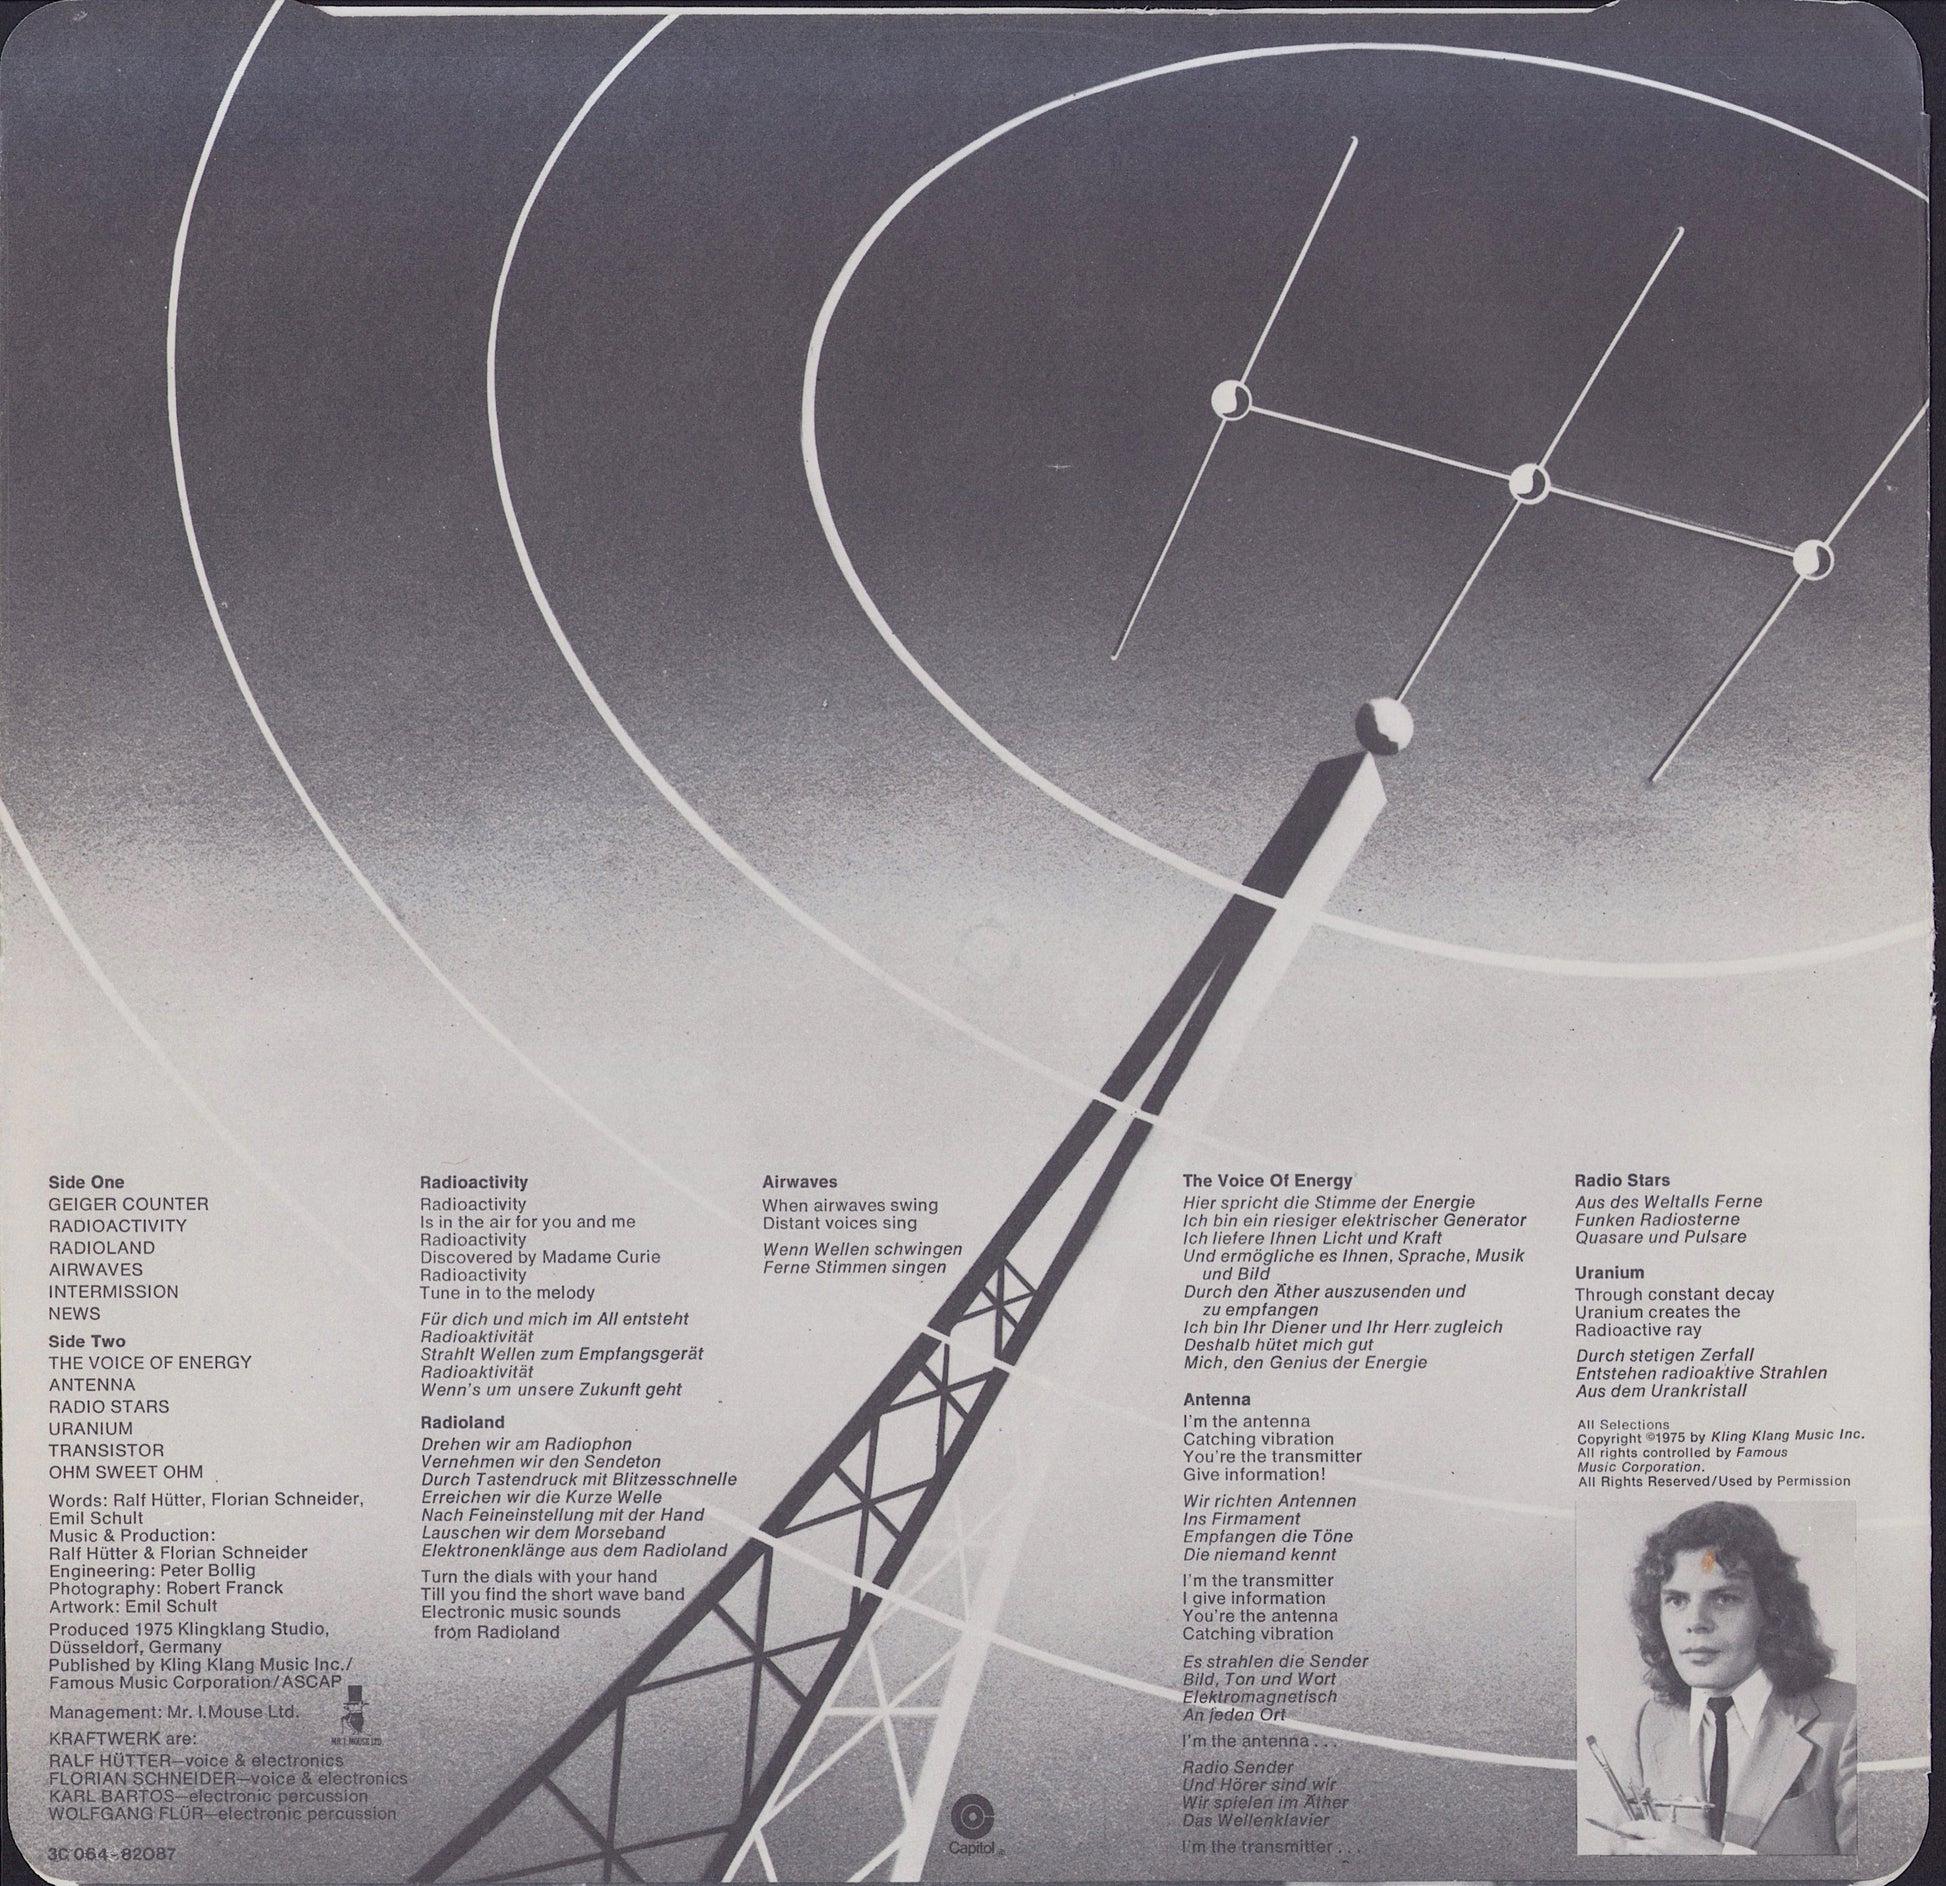 Kraftwerk ‎- Radio-Activity Vinyl LP IT